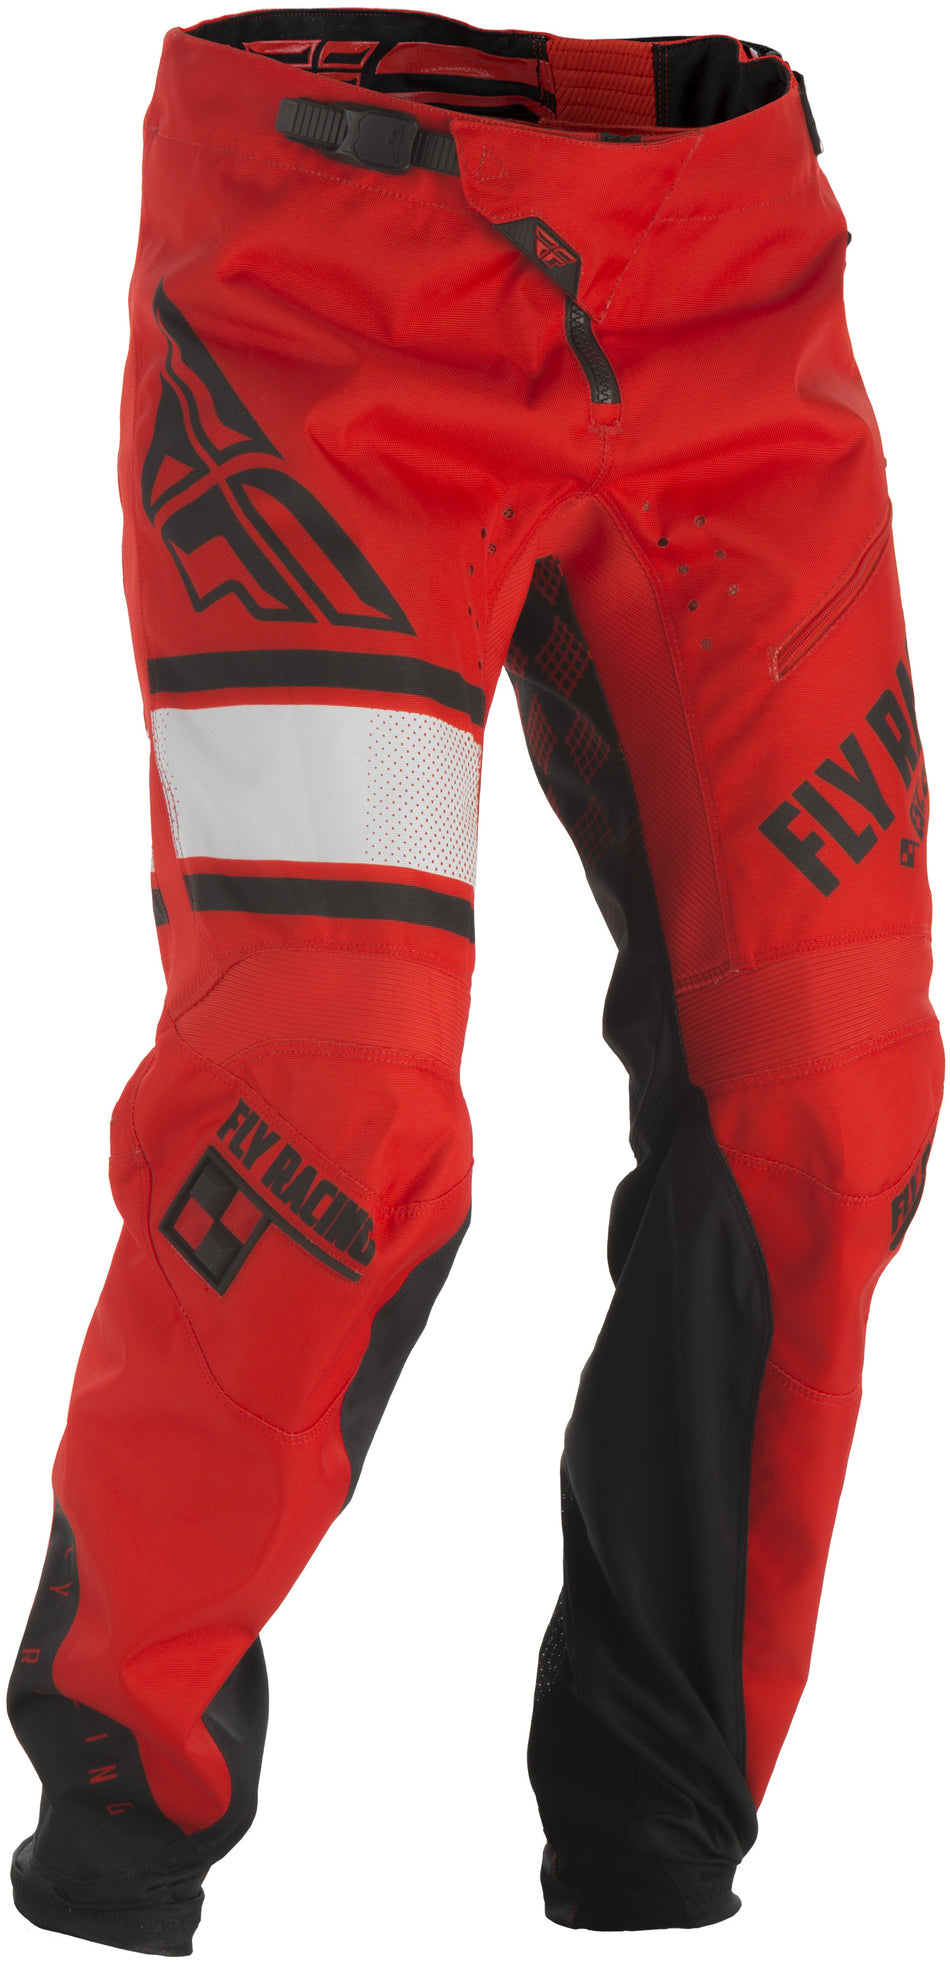 FLY RACING Kinetic Era Bicycle Pants Red/Black Sz 20 371-02220